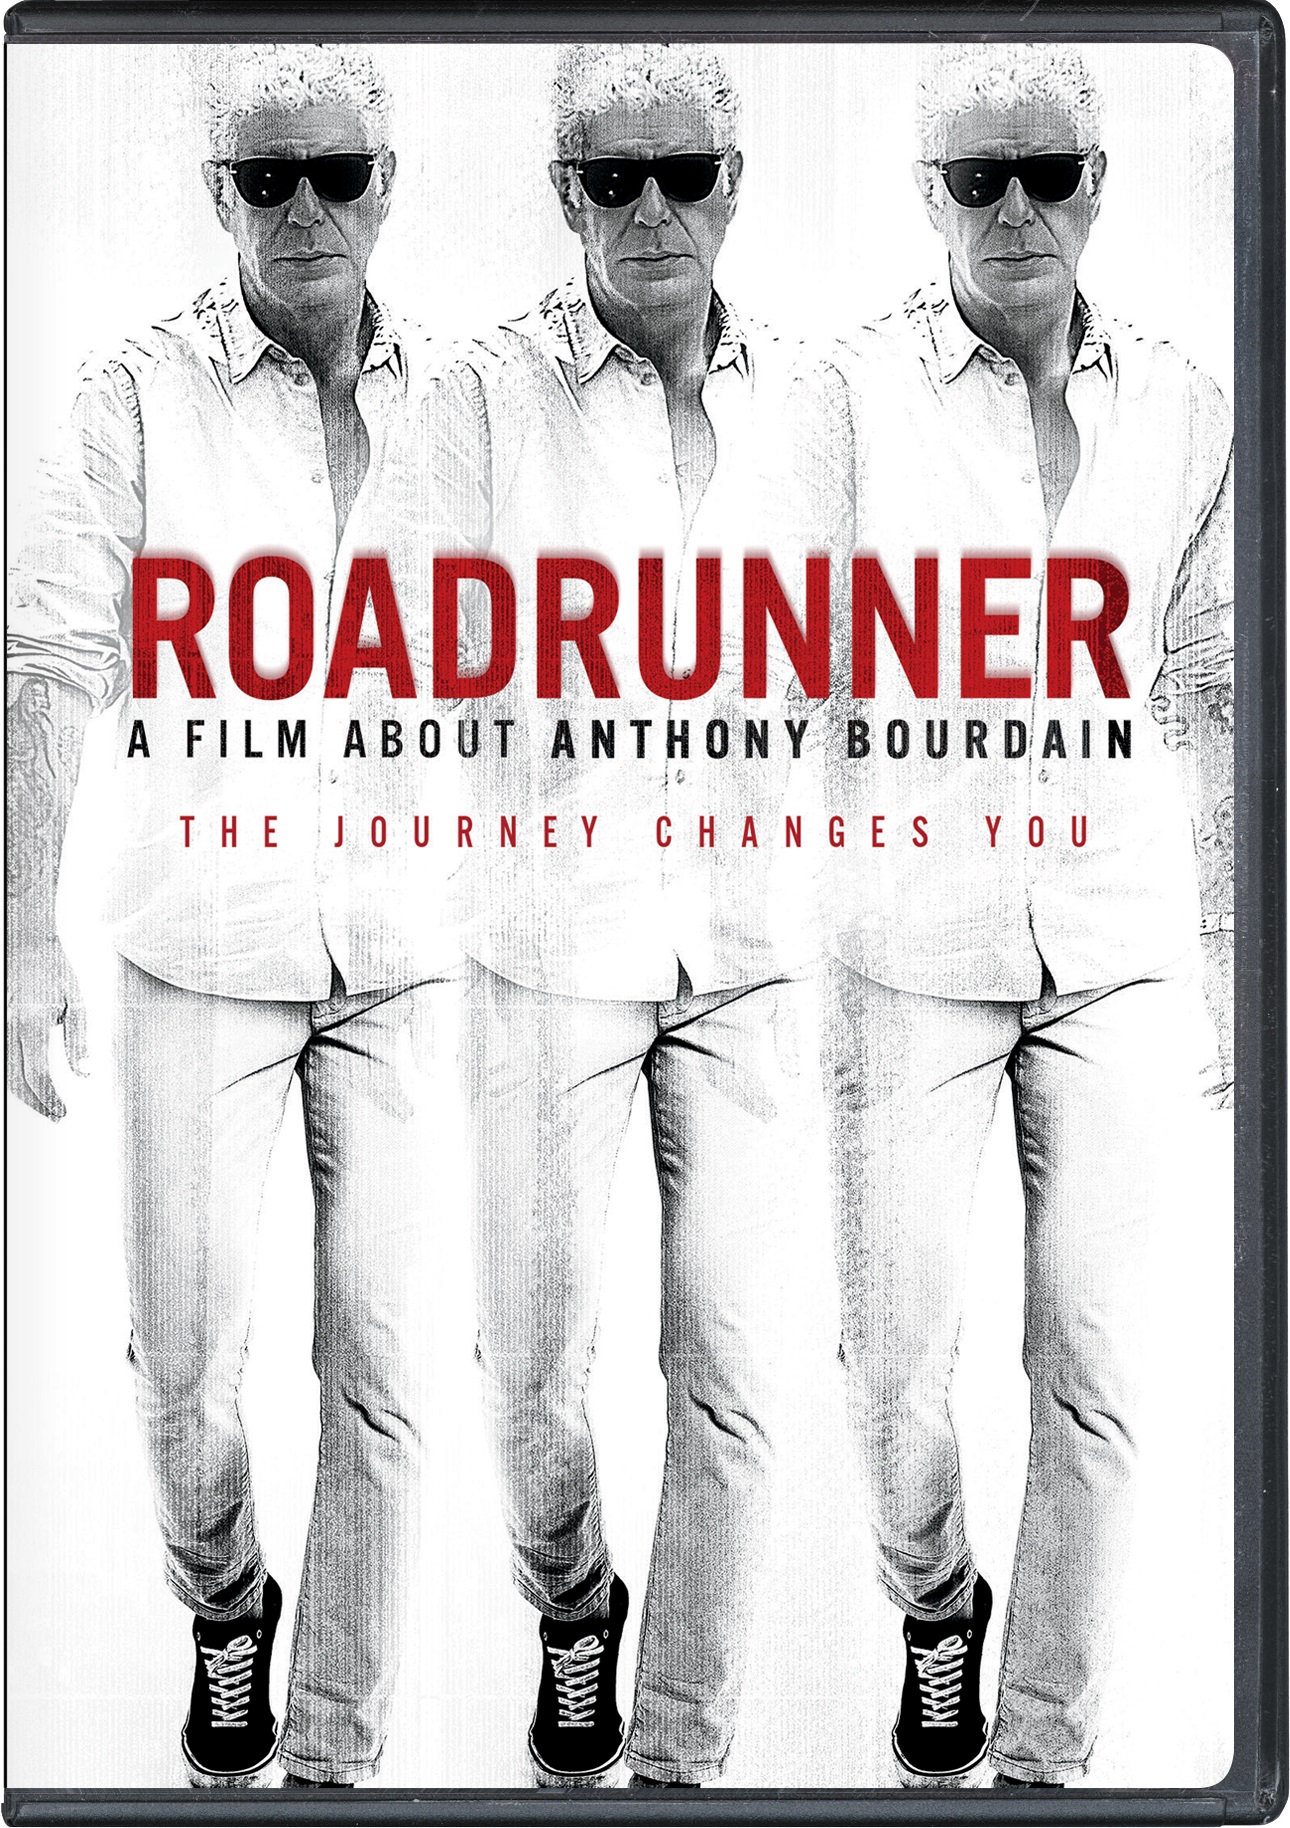 Roadrunner - A Film About Anthony Bourdain - DVD [ 2021 ]  - Documentaries On DVD